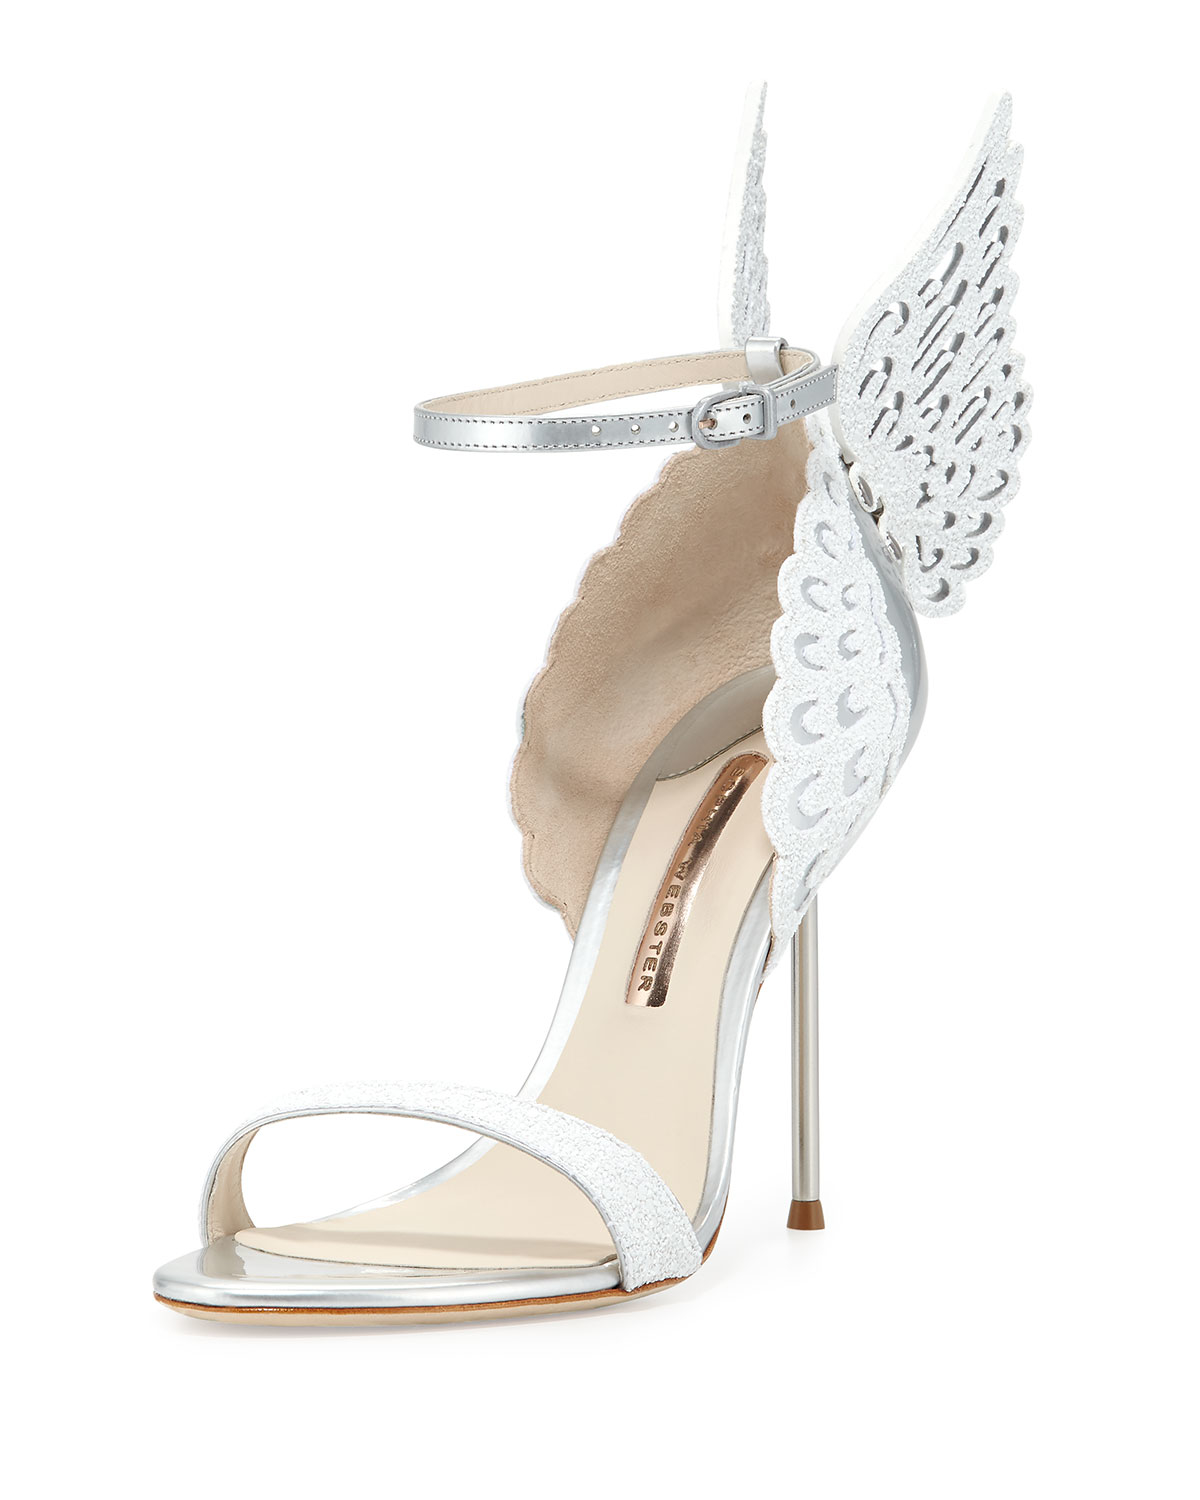 silver sophia webster heels